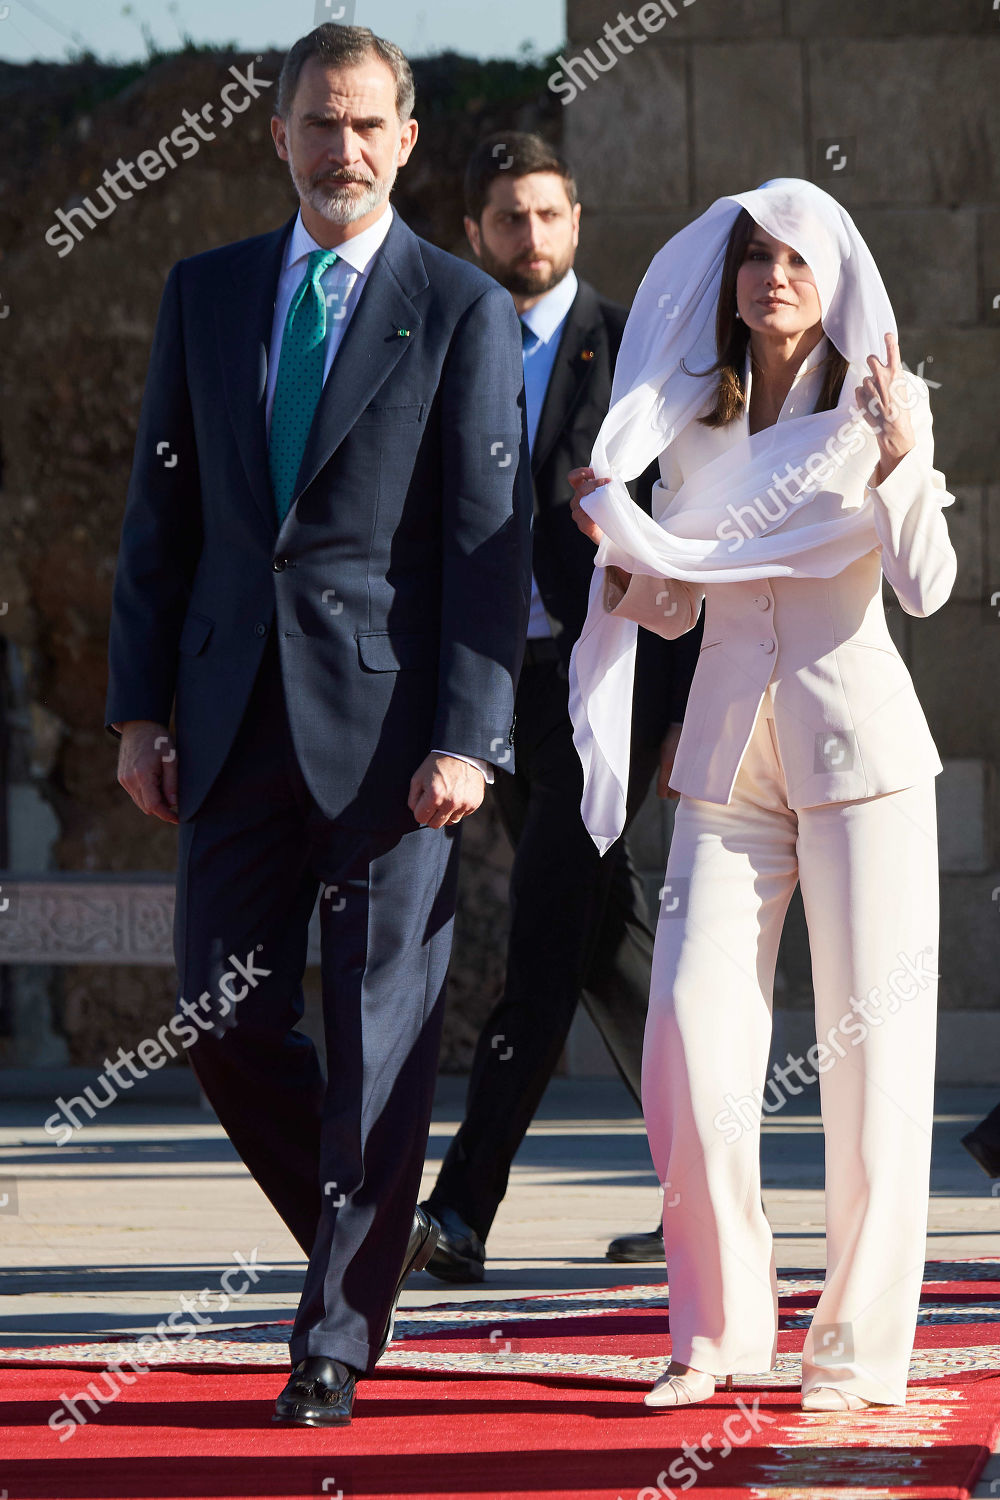 spanish-royals-visit-to-rabat-morocco-shutterstock-editorial-10105309b.jpg